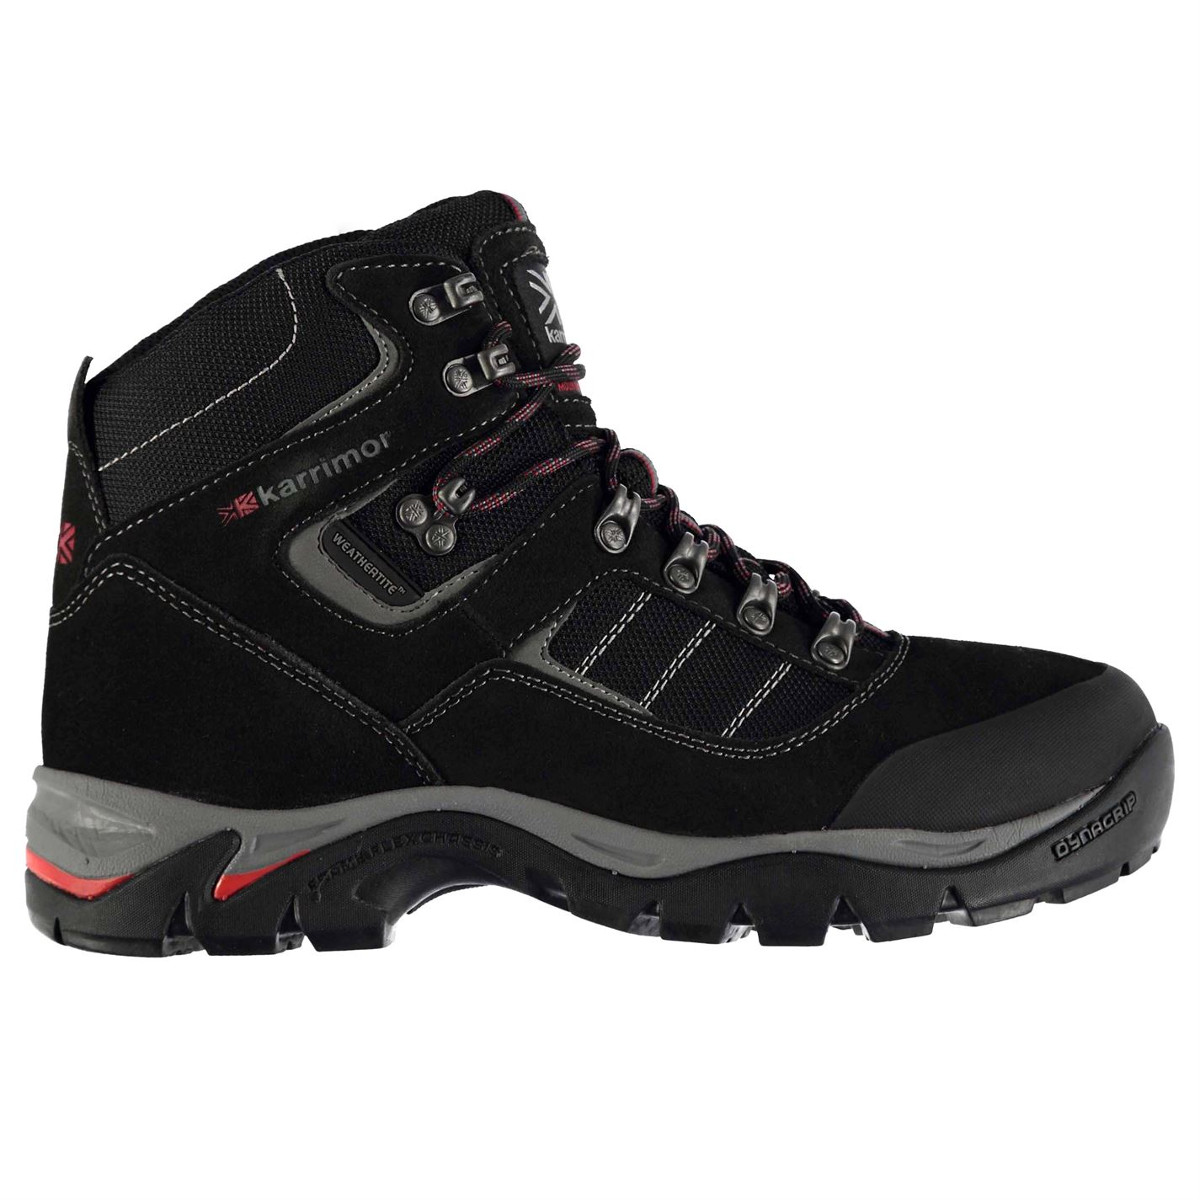 Karrimor Men's Ksb 200 Waterproof Mid Hiking Boots - Black, 12